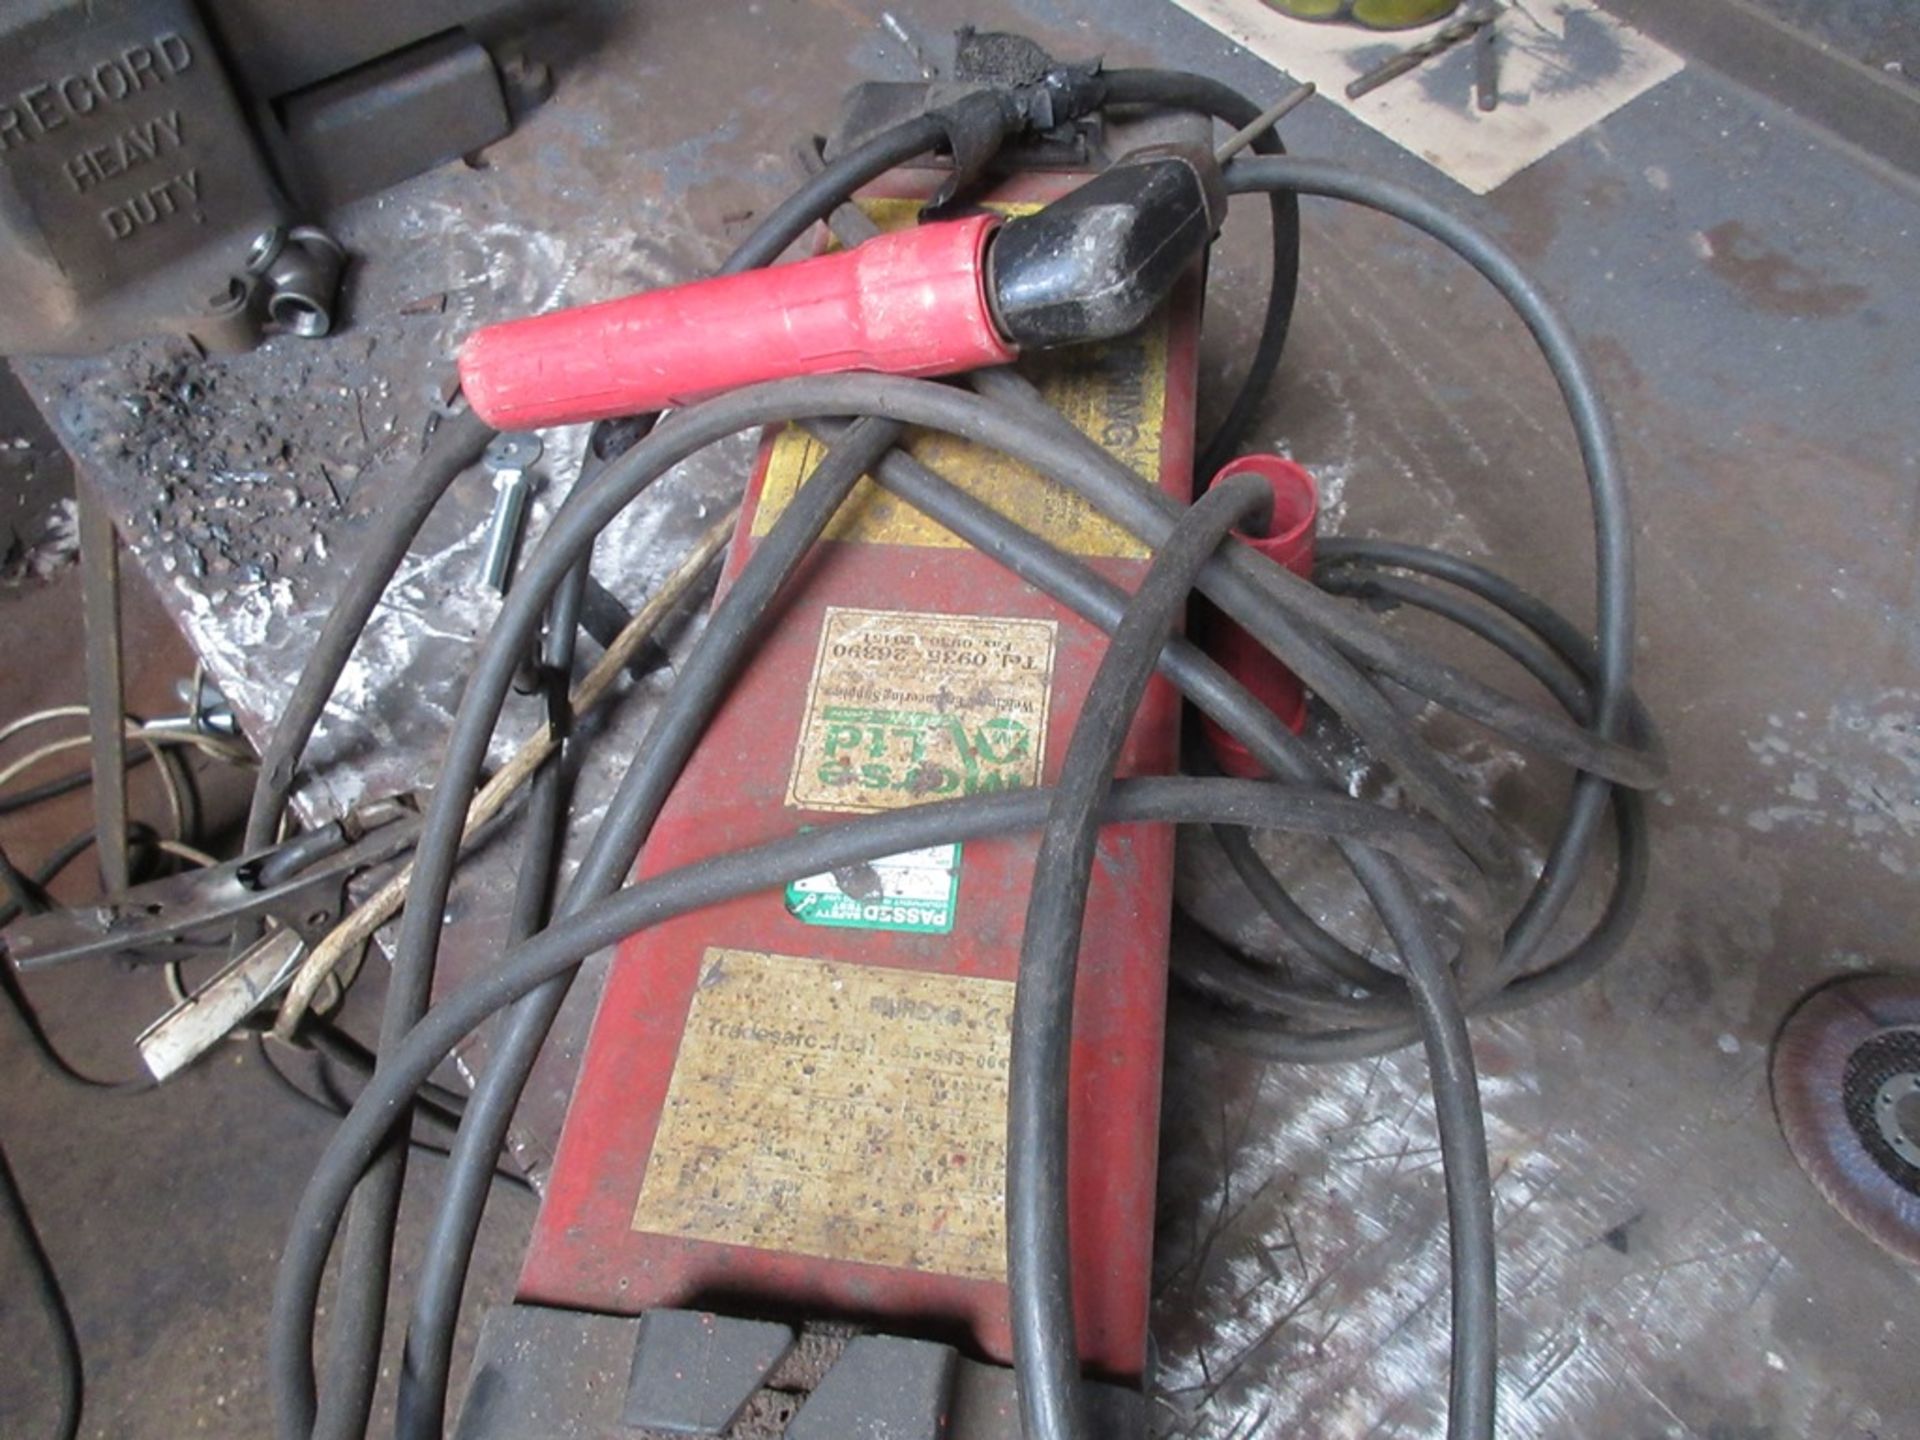 Tradesarc 131i arc welder, serial no. 535-543-0048 - Image 3 of 4